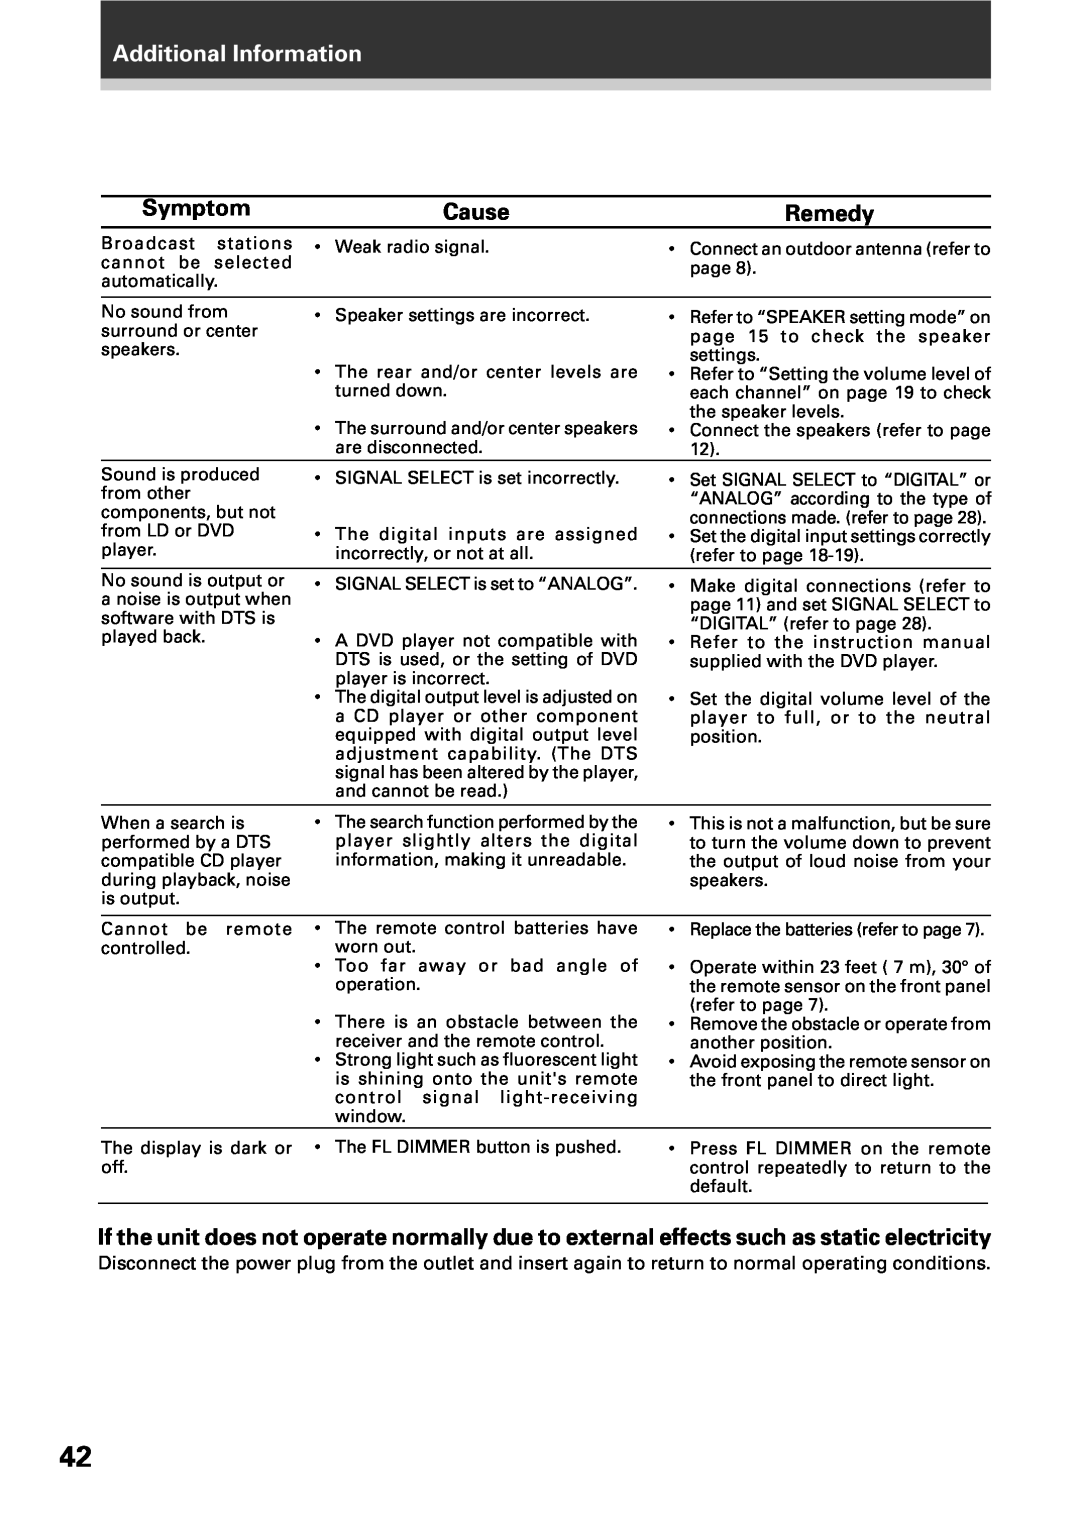 Pioneer VSX-D309 manual Additional Information, Symptom, Cause, Remedy 